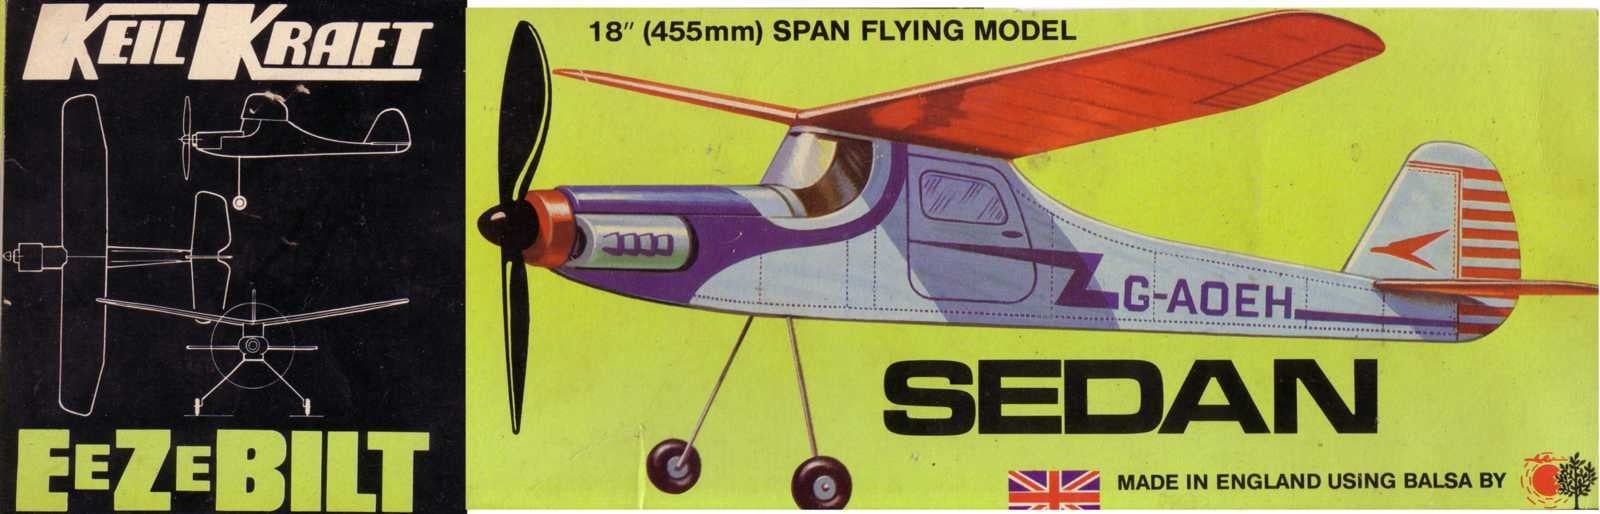 Keil Kraft EeZe Bilt Spitfire Balsa Wood Airplane Flying Model Kit #KK0022 